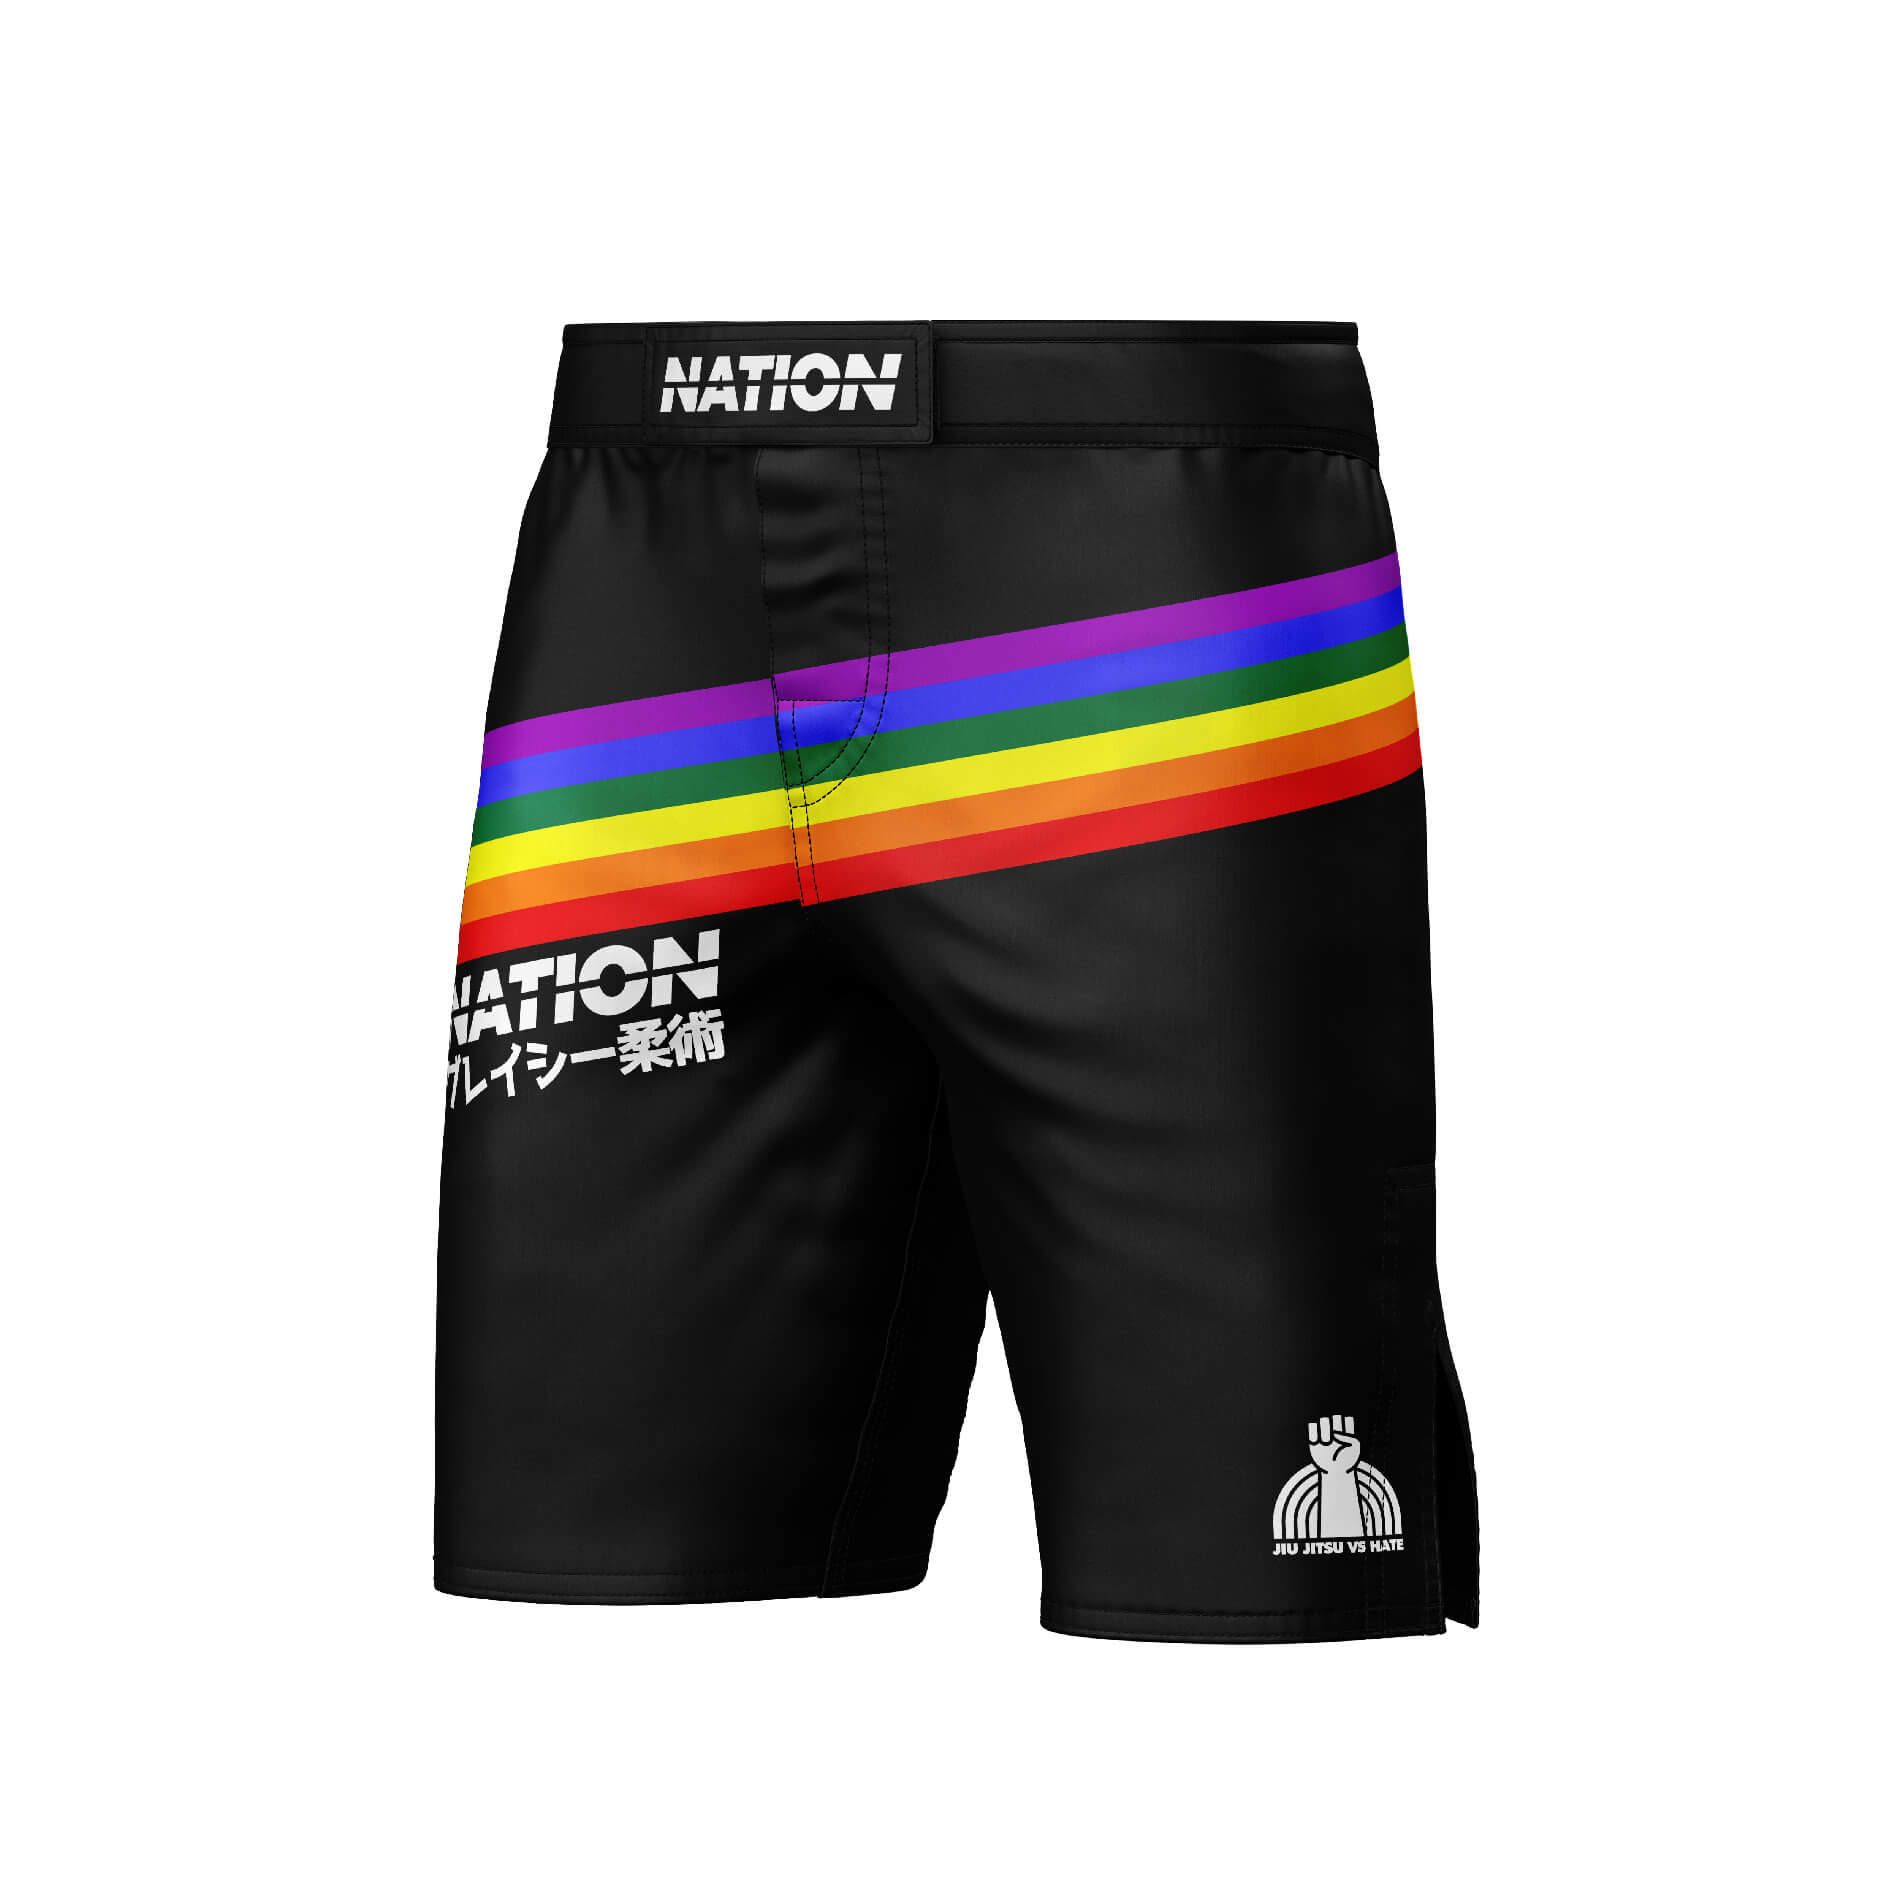 pride-bjj-grappling-shorts-black-nation-jiu-jitsu-